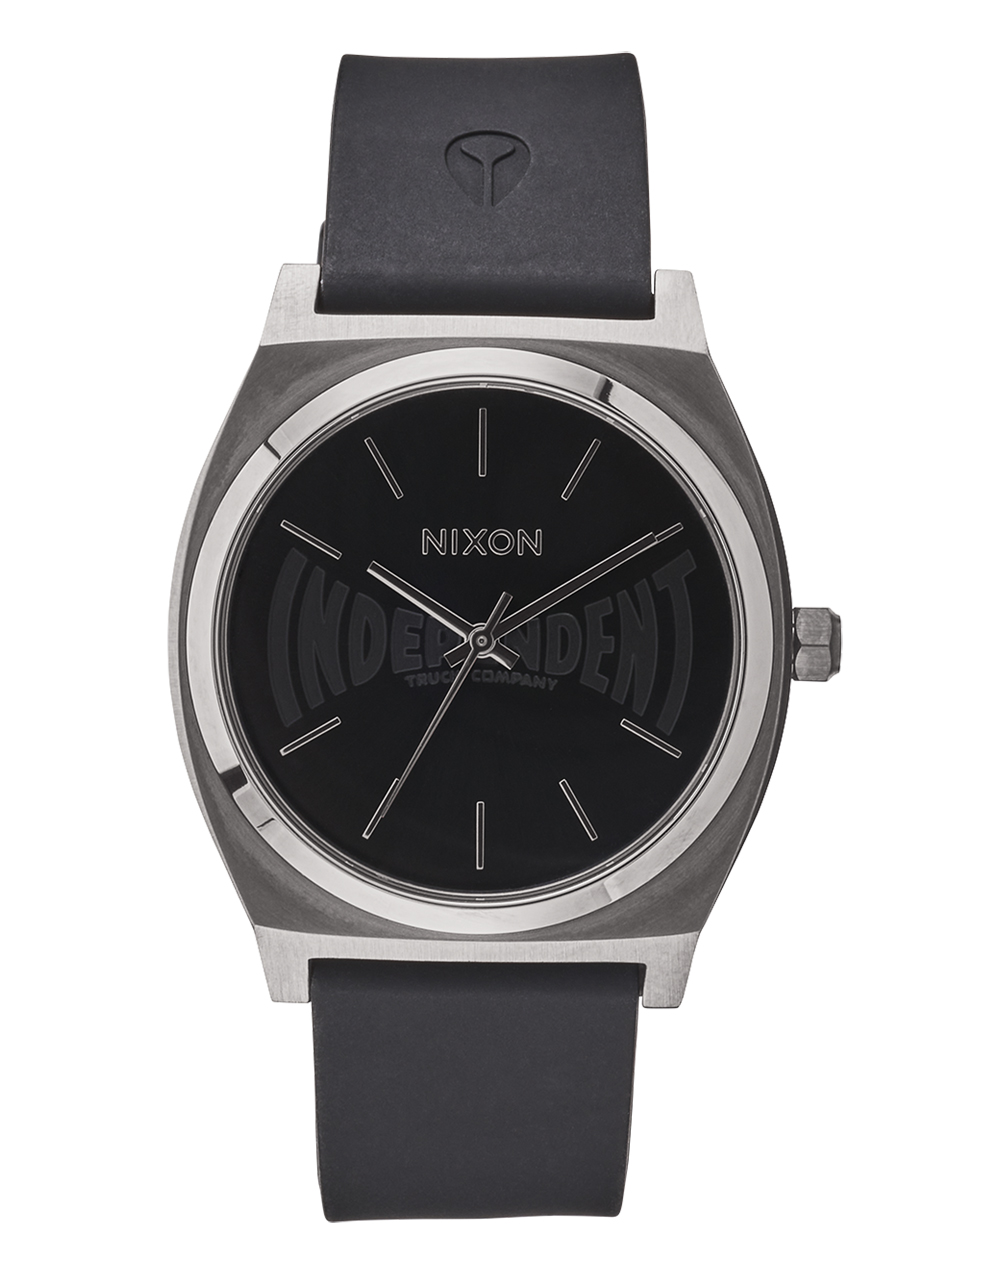 NIXON x Independent Time Teller Watch